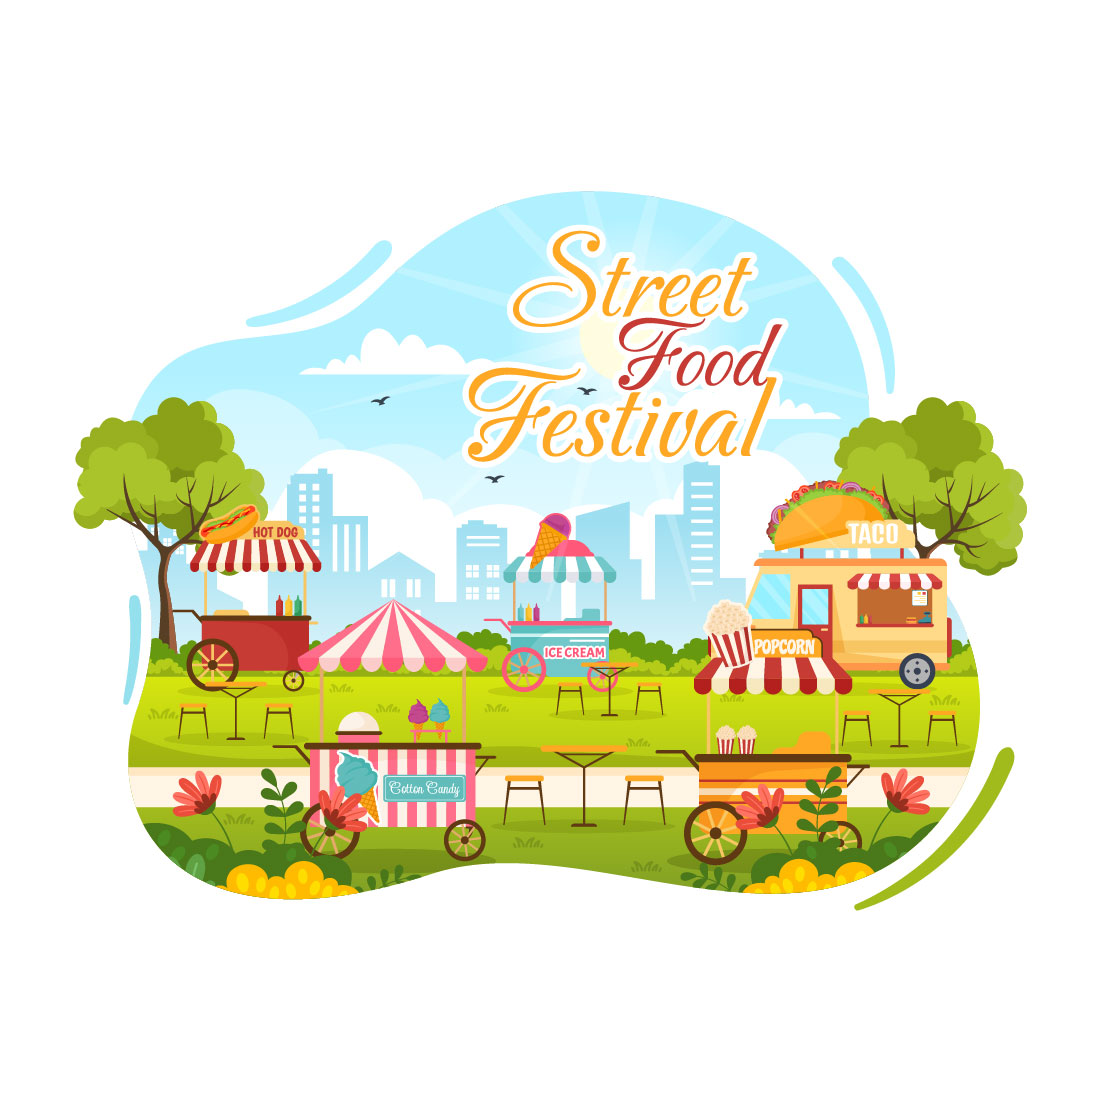 16 Street Food Festival Event Illustration preview image.